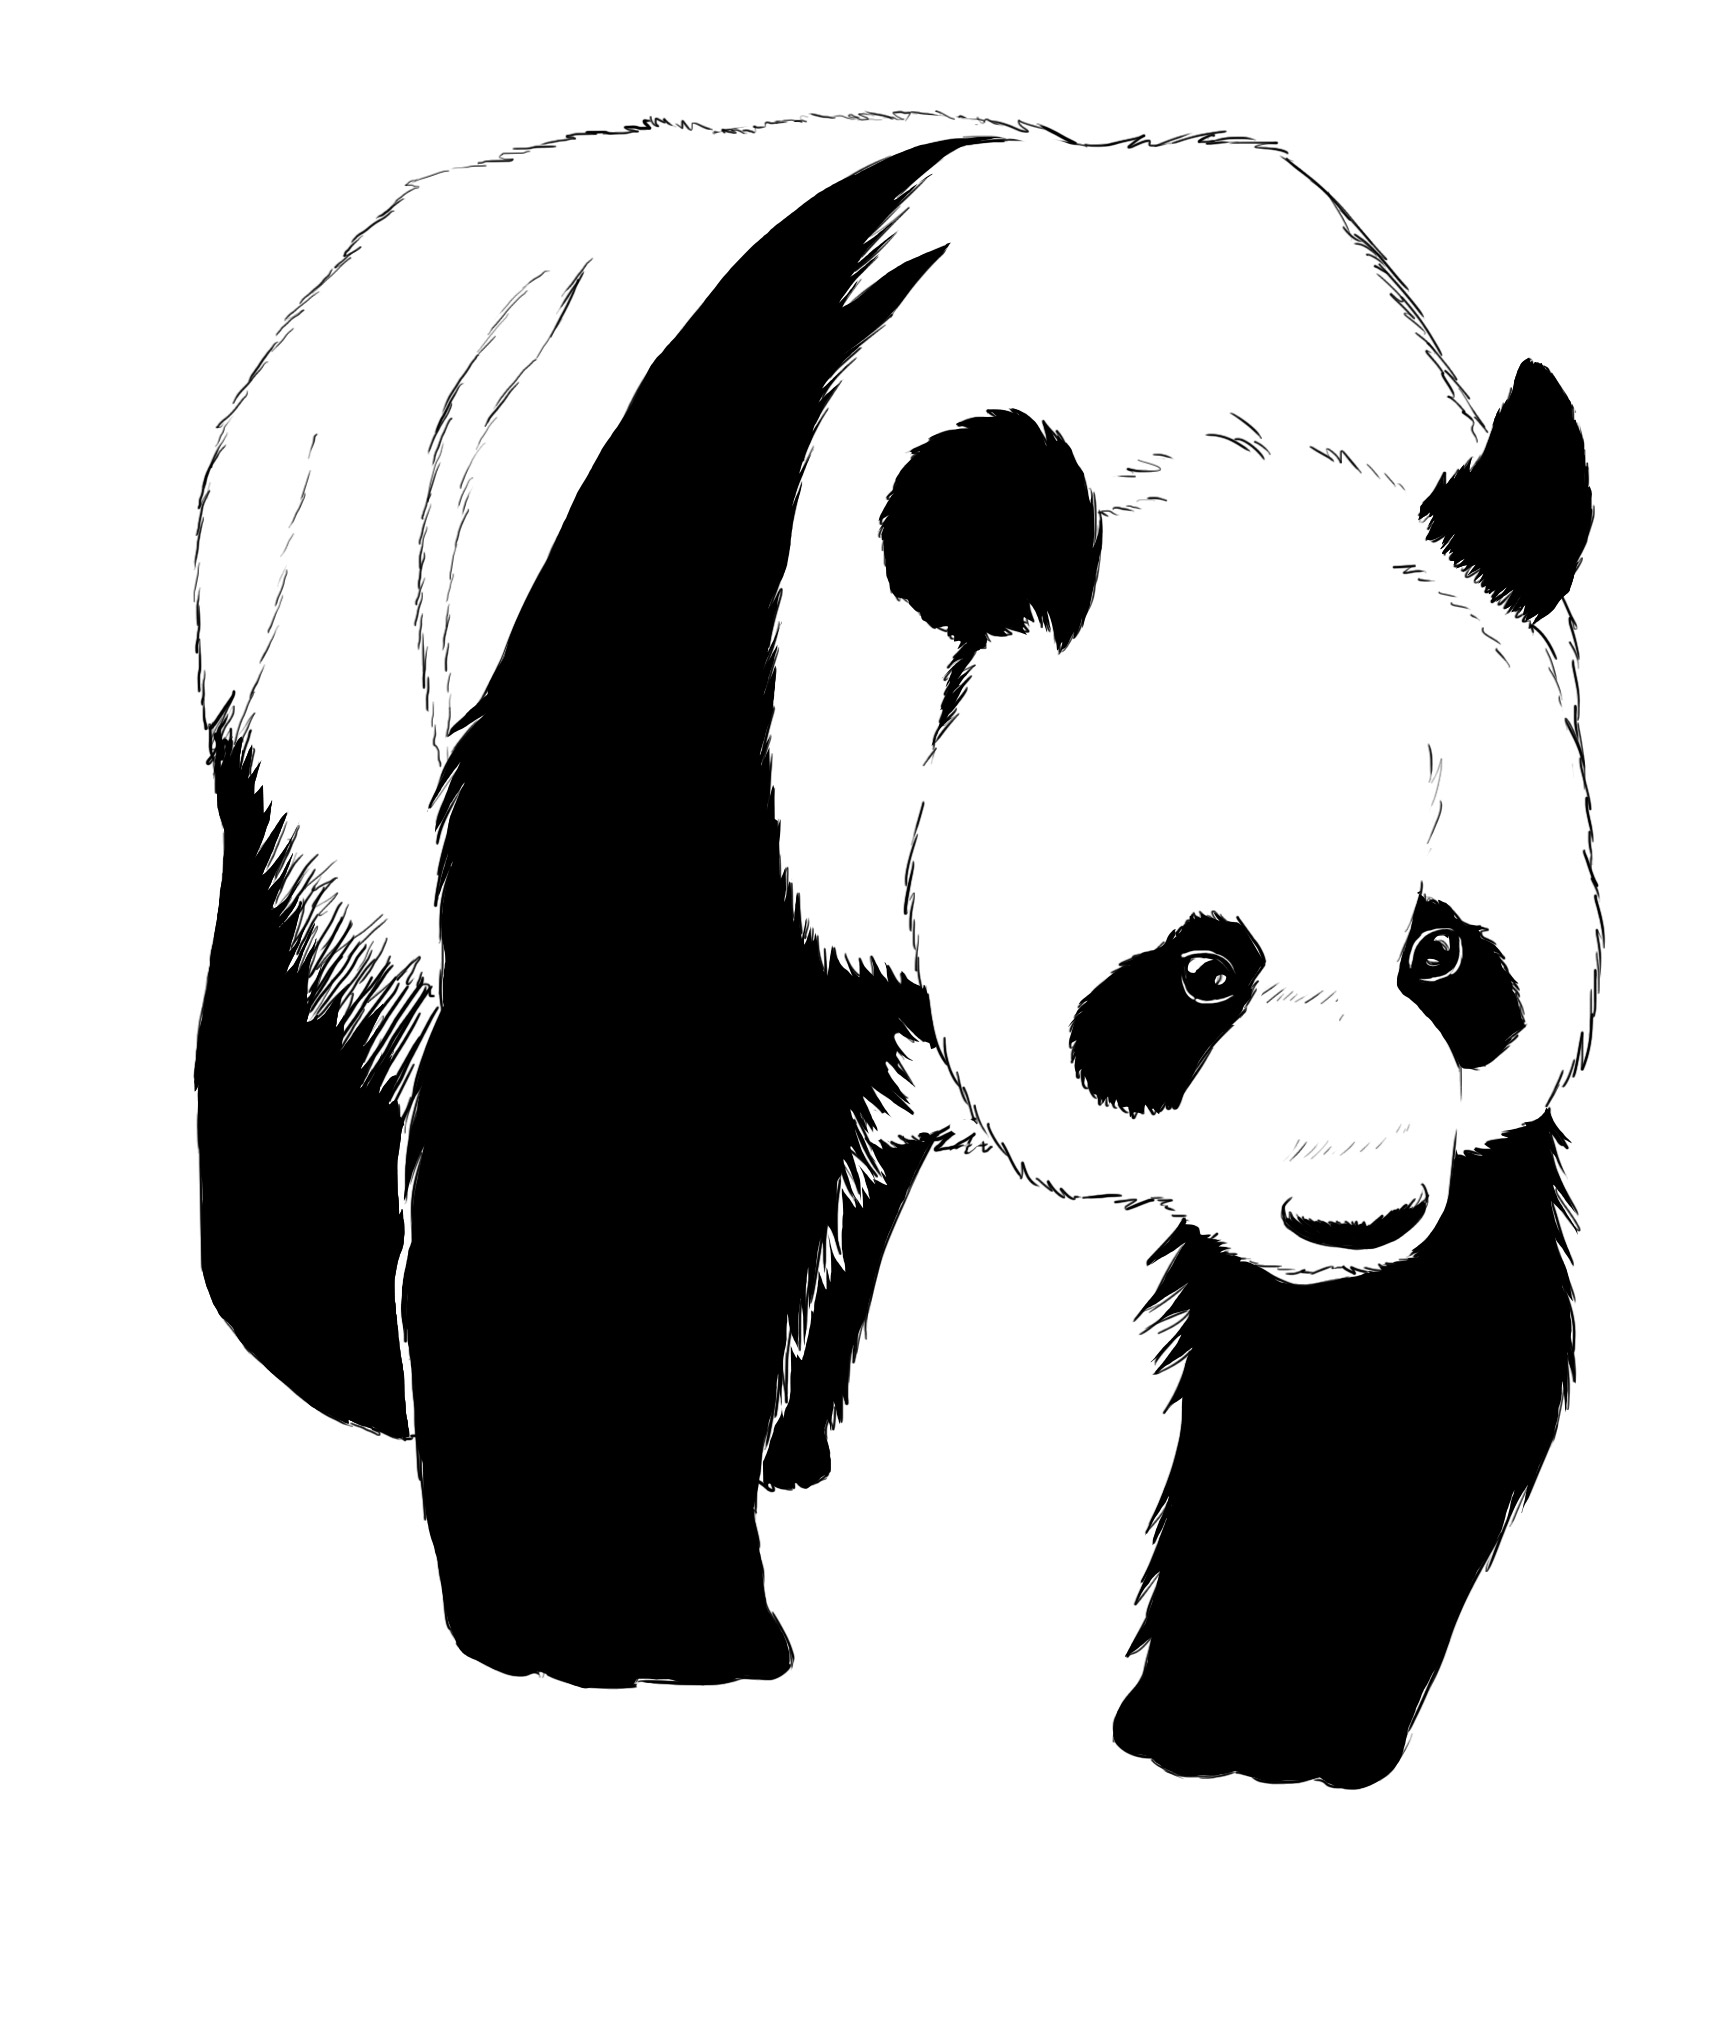 Dessin final du panda